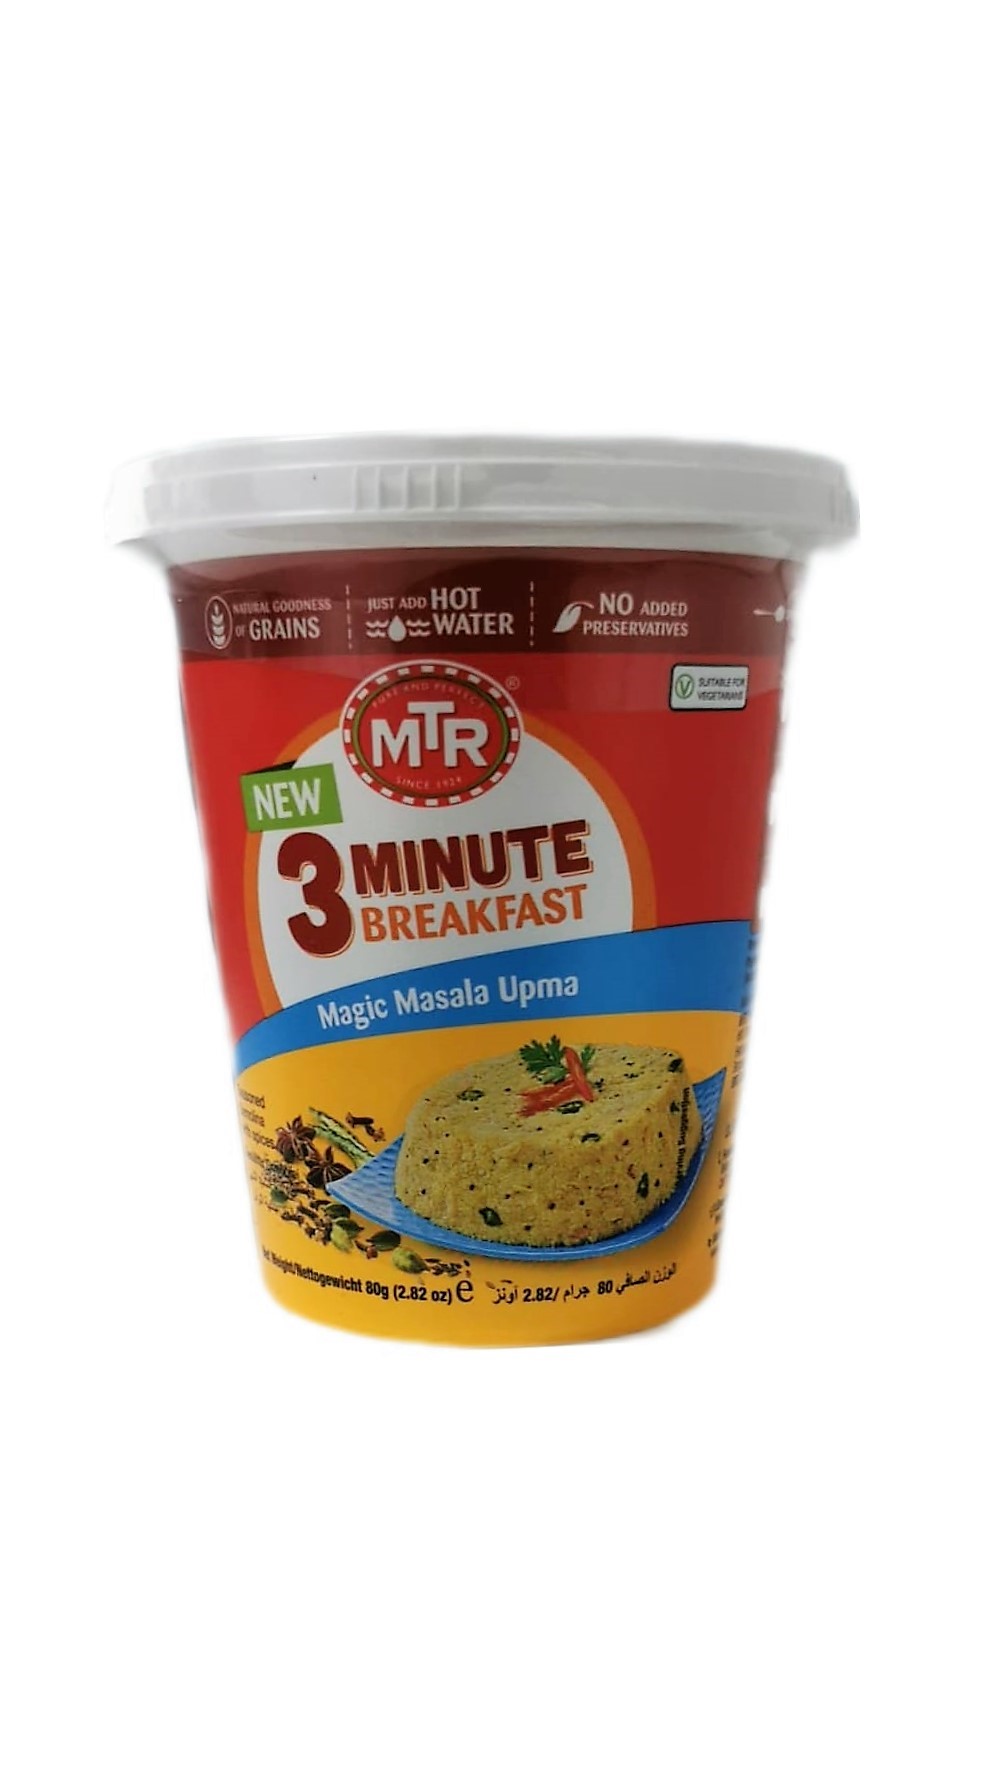 MTR 3 Minute Breakfast
Magic Masala Upma 